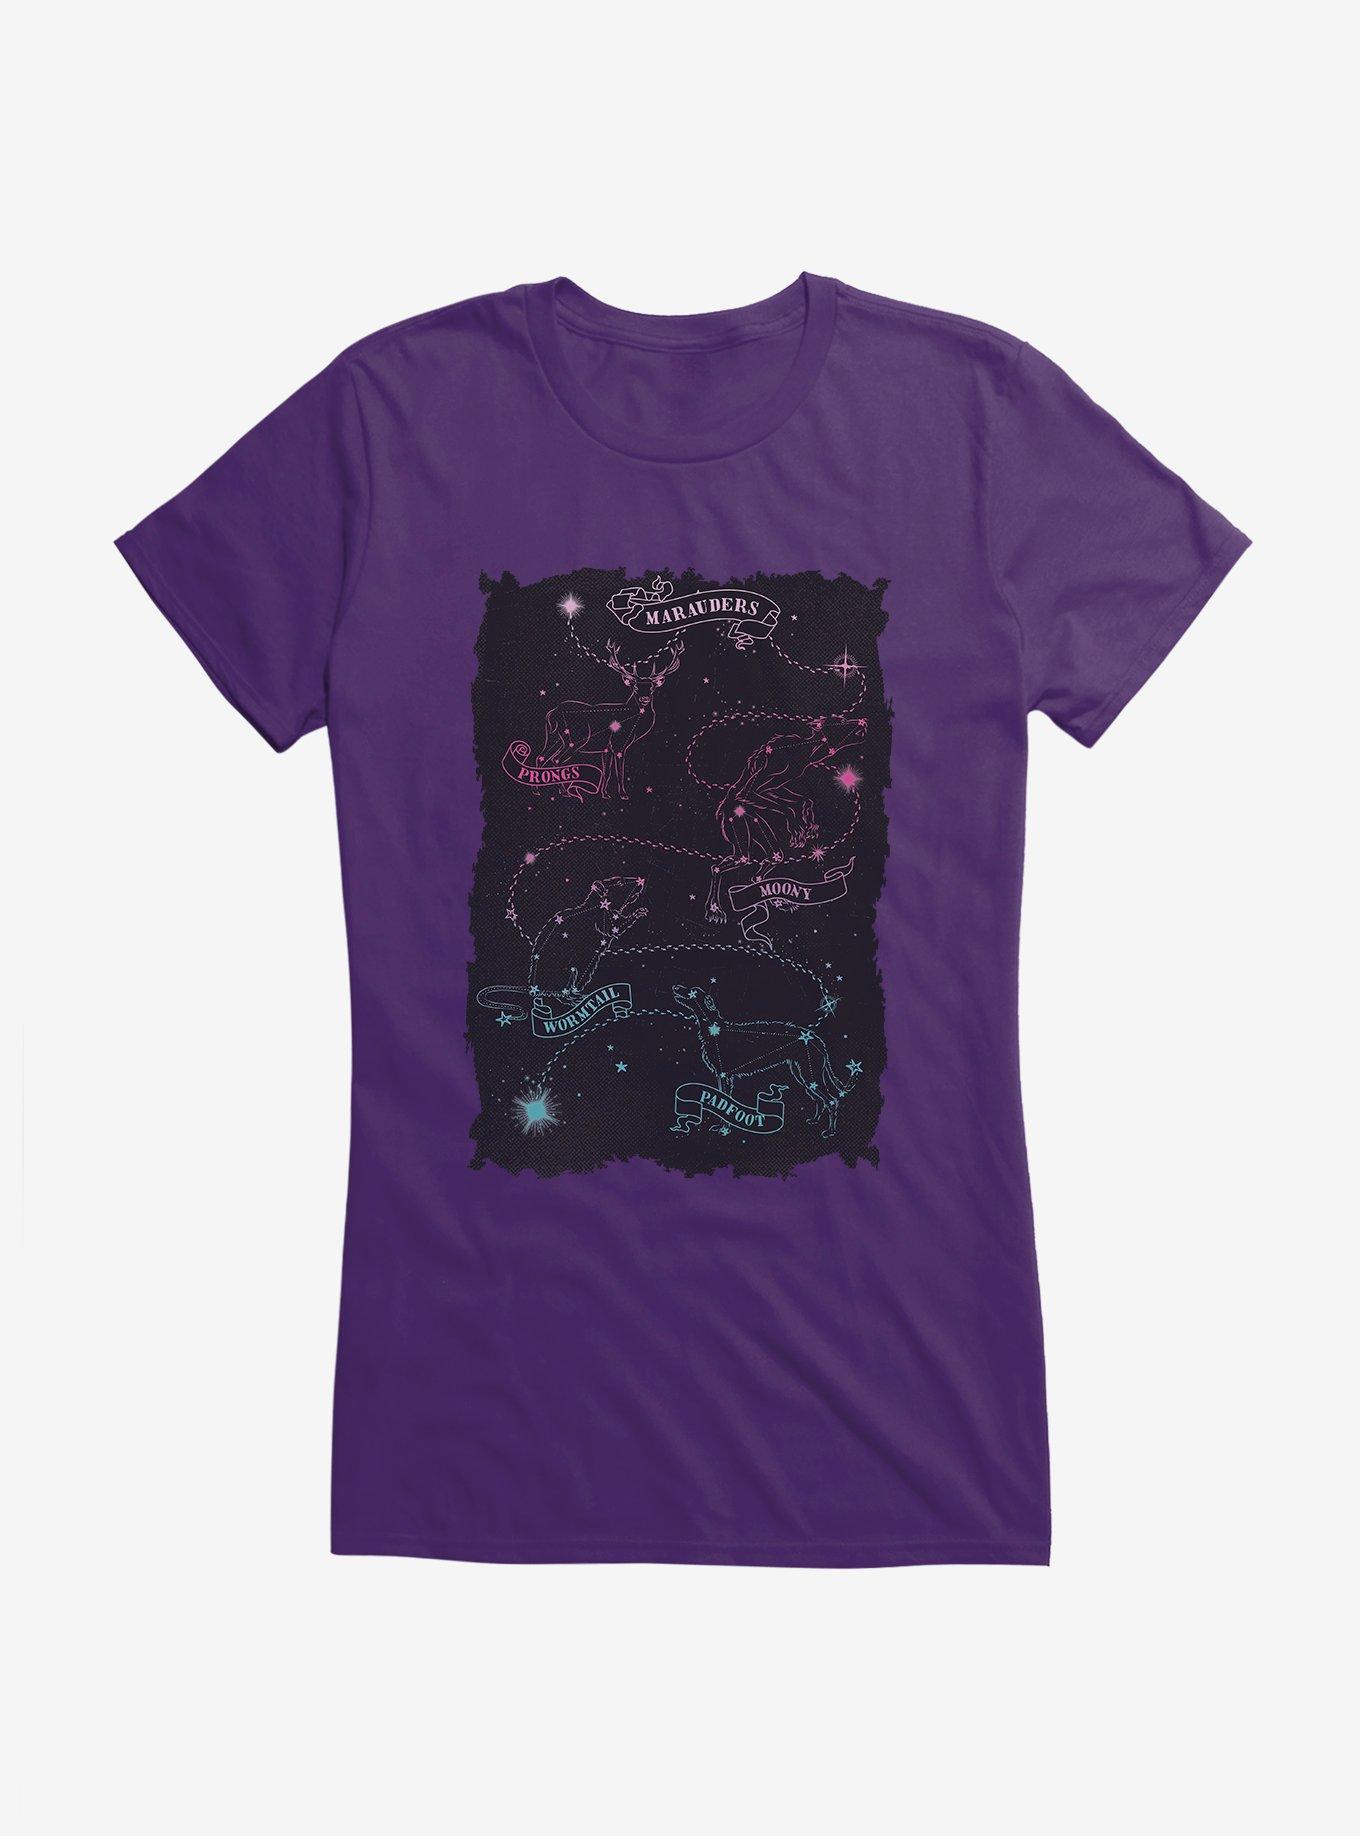 Harry Potter Marauder's Map Color Girls T-Shirt